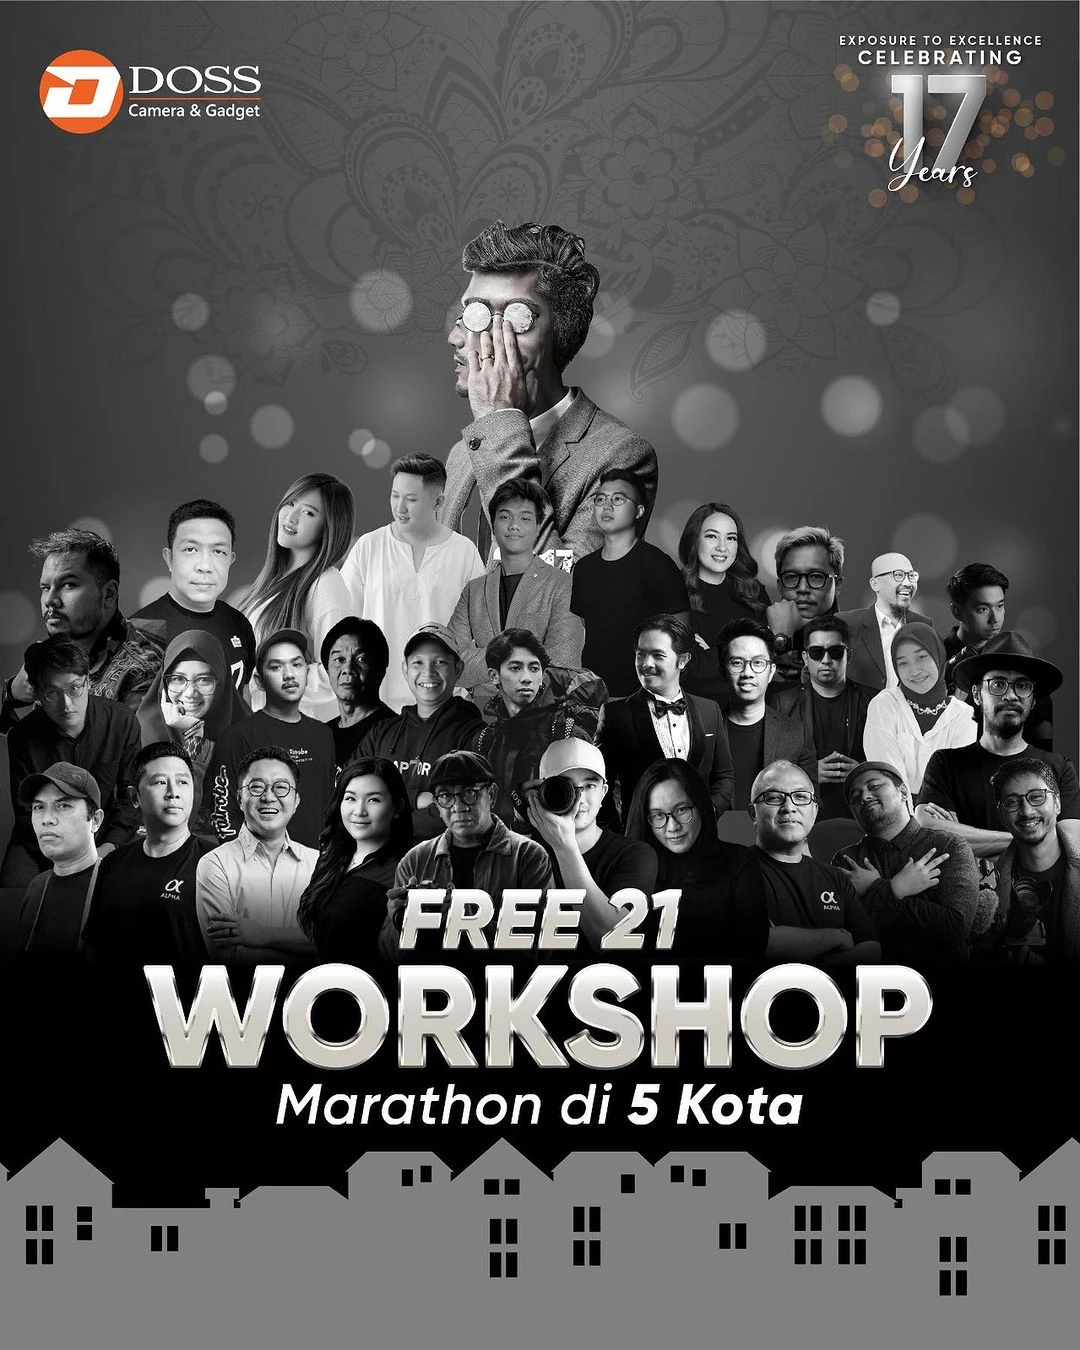 Ini Dia Free Workshop Fotografi & Videografi di Makassar & Bandung Special DOSS Anniversary ke 17, Jangan Lupa Buat Ikutan.